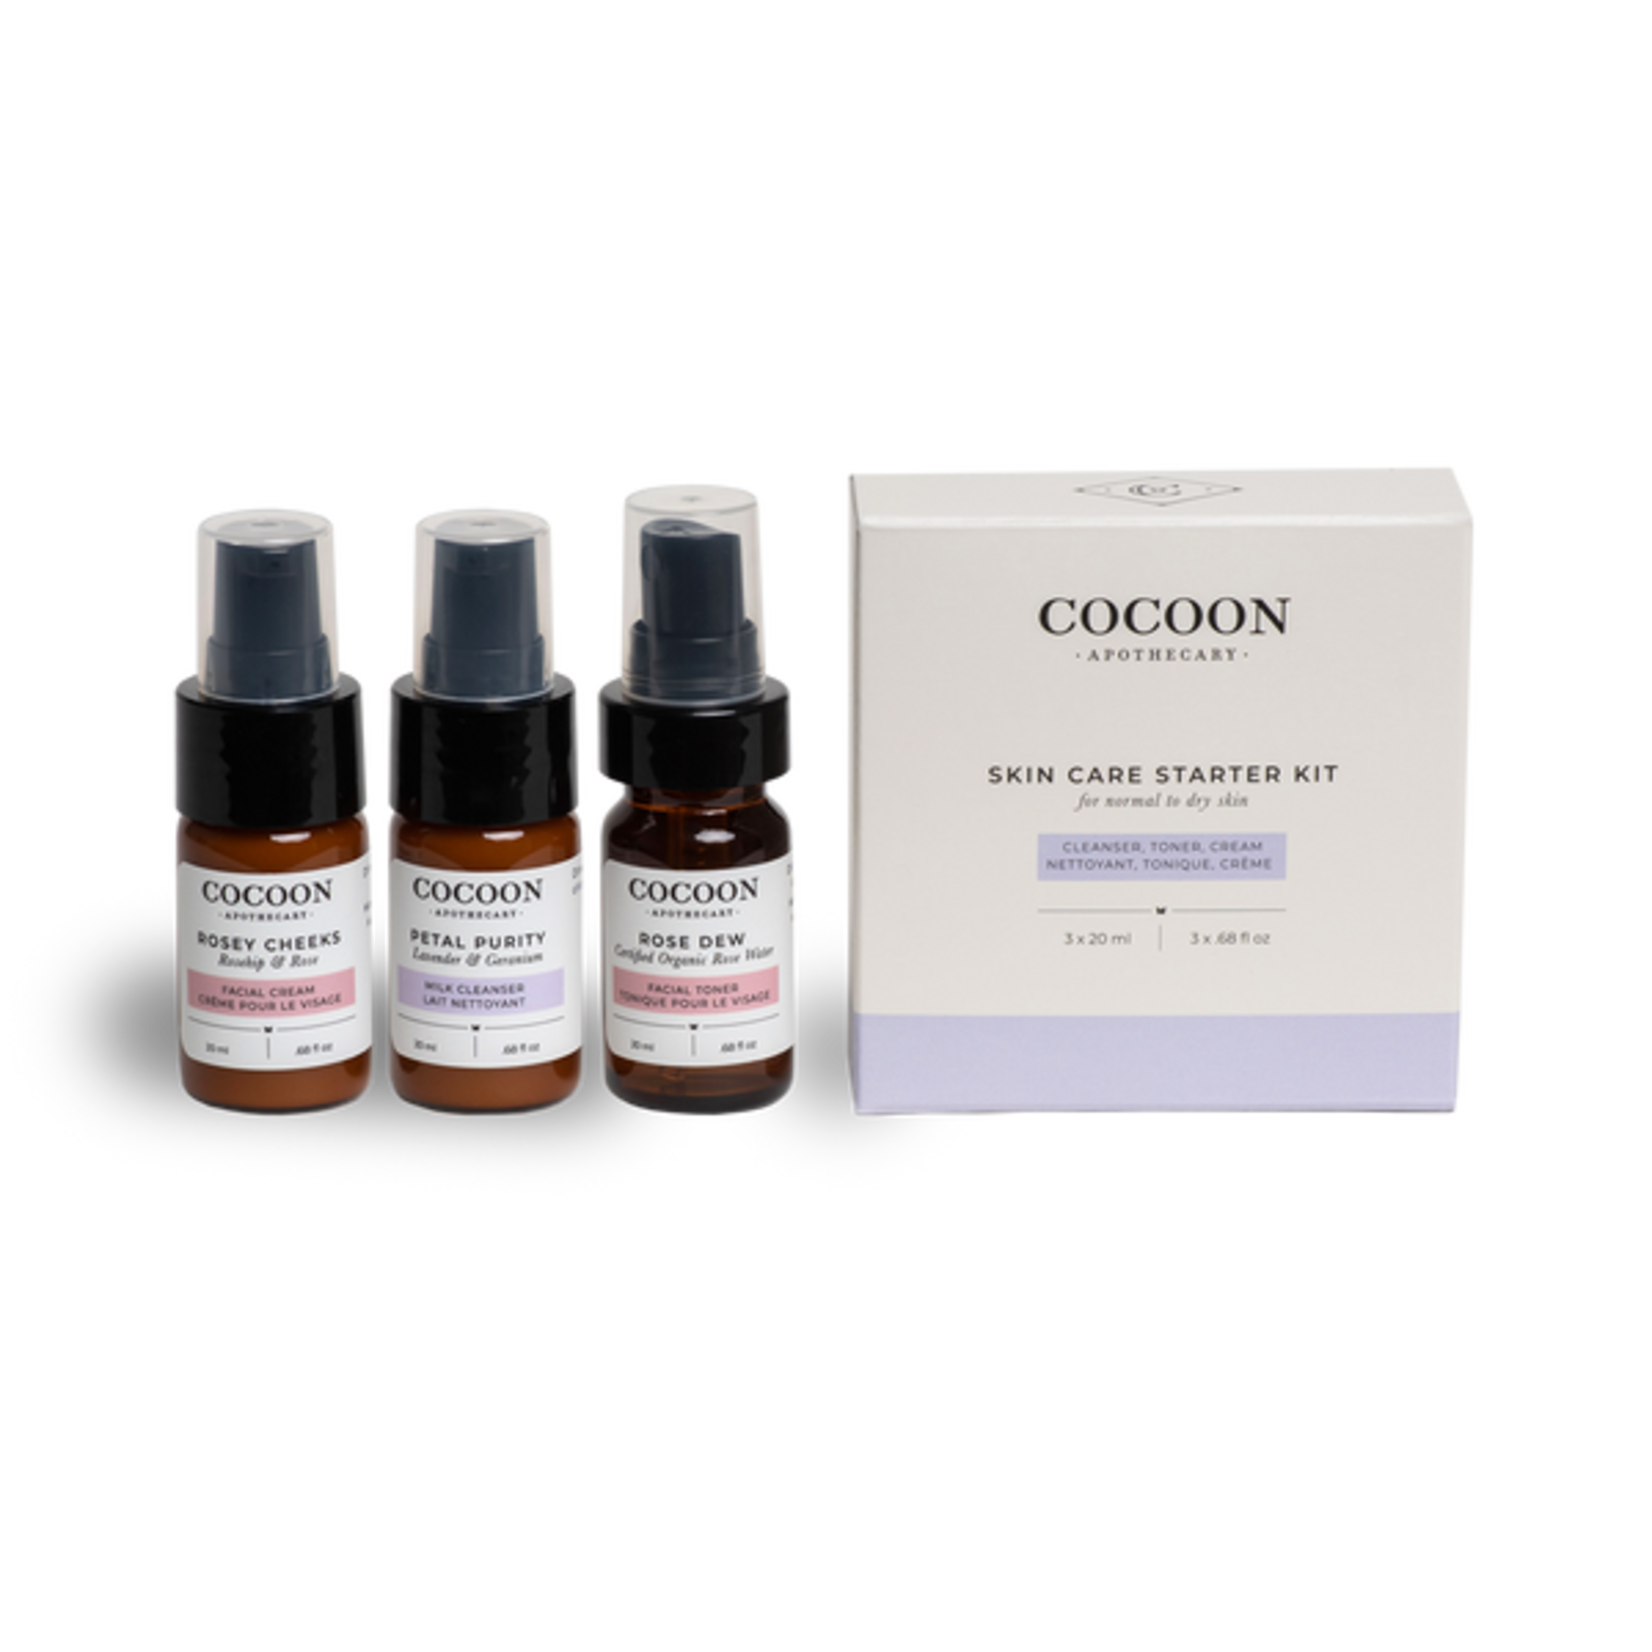 Cocoon Skin Care Starter dry Kit